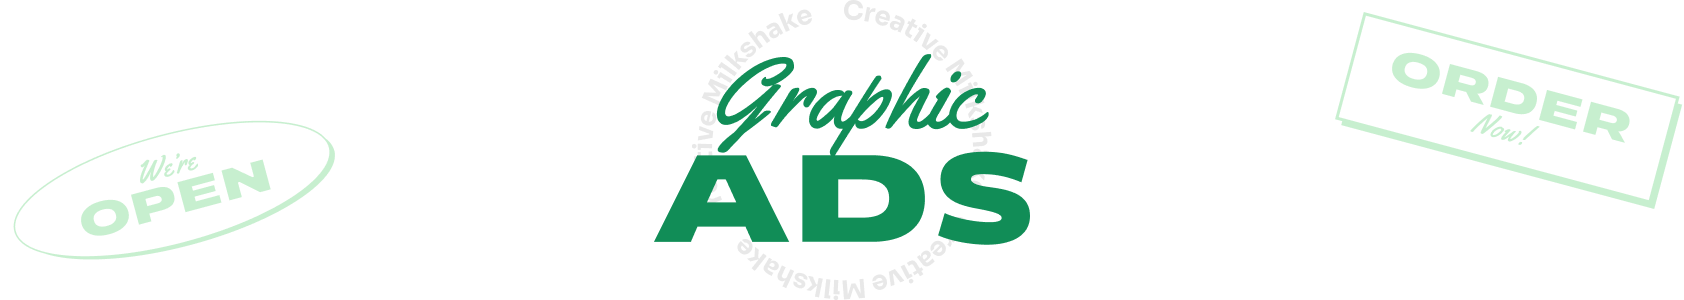 Graphic Ads